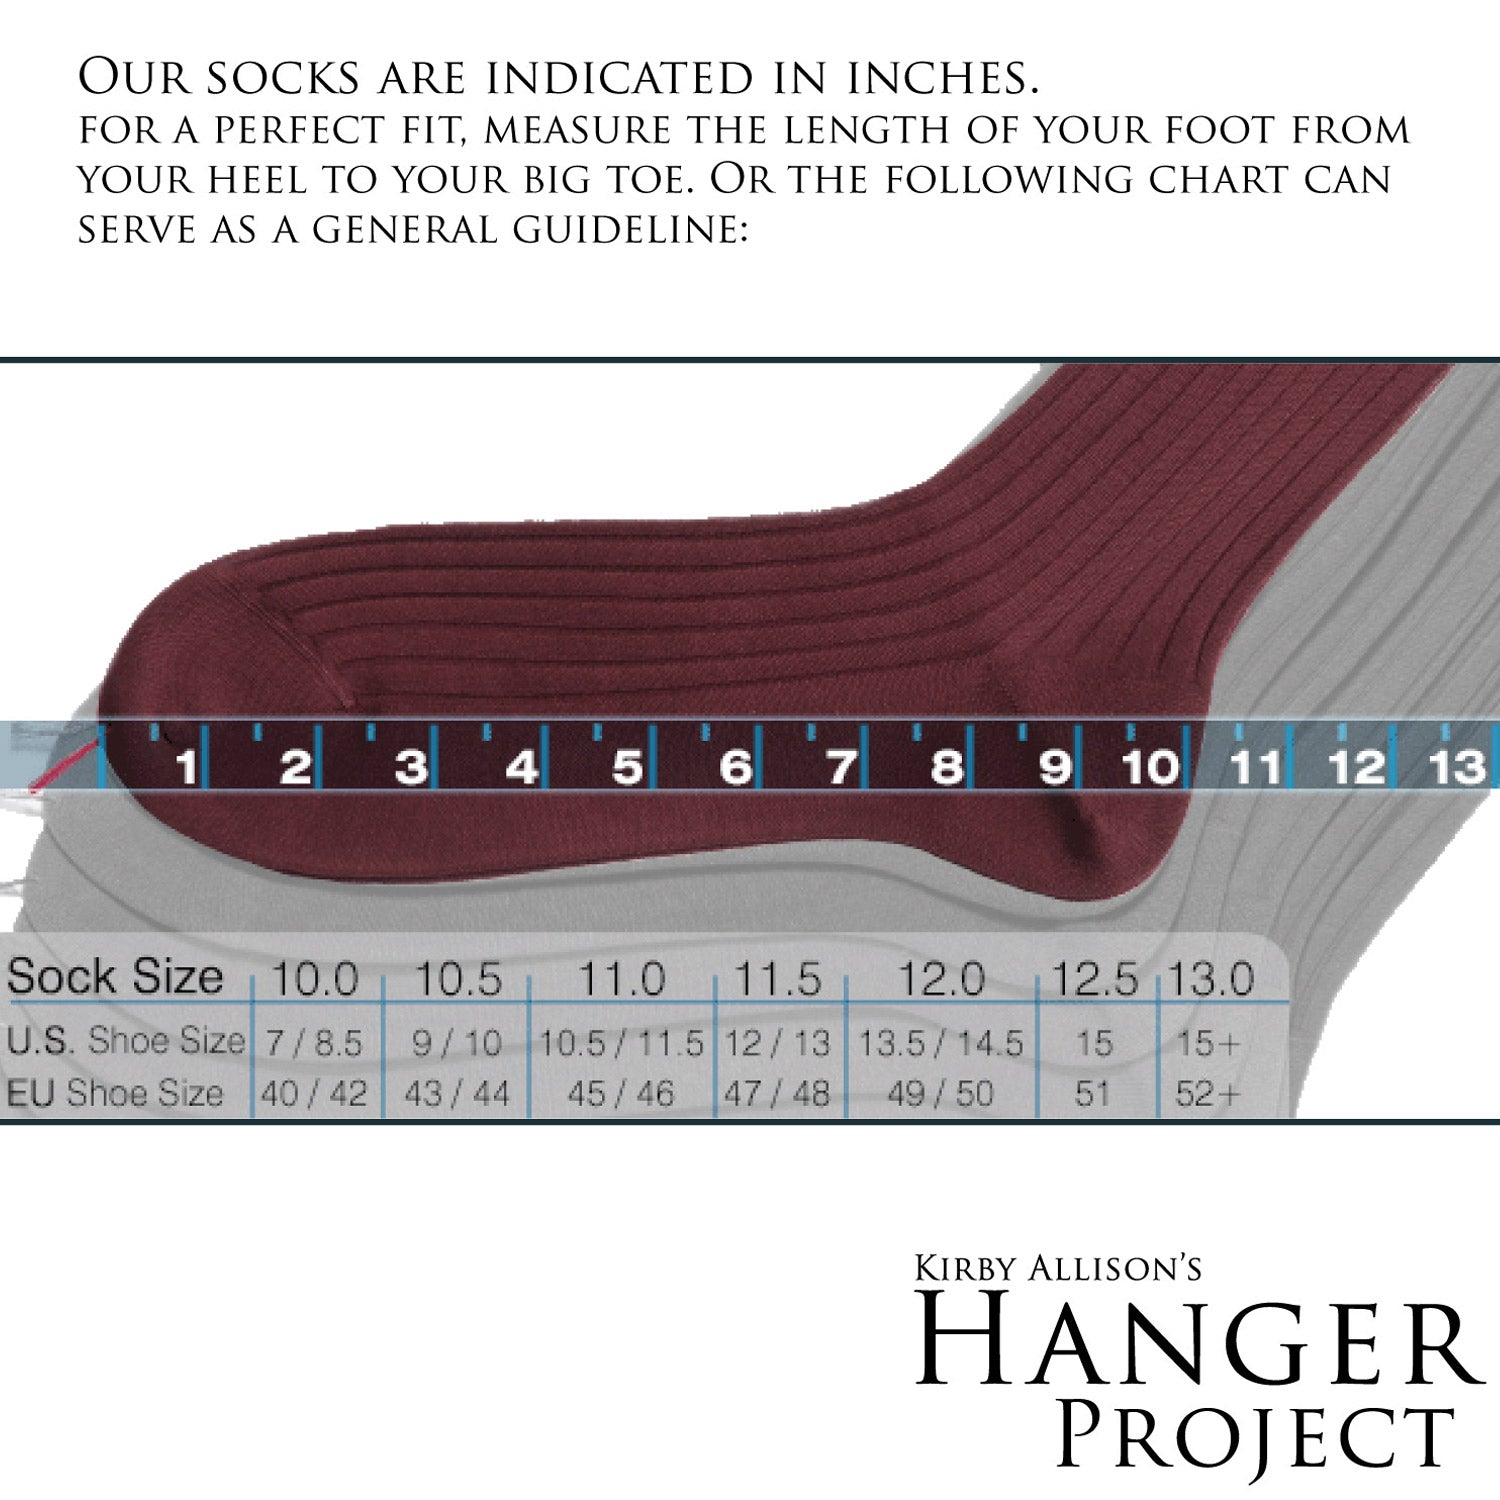 KirbyAllison.com's Hanger project Sovereign Grade Lana Pura Super-Fine OTC 100% Wool Socks size chart for moisture-wicking wool socks.